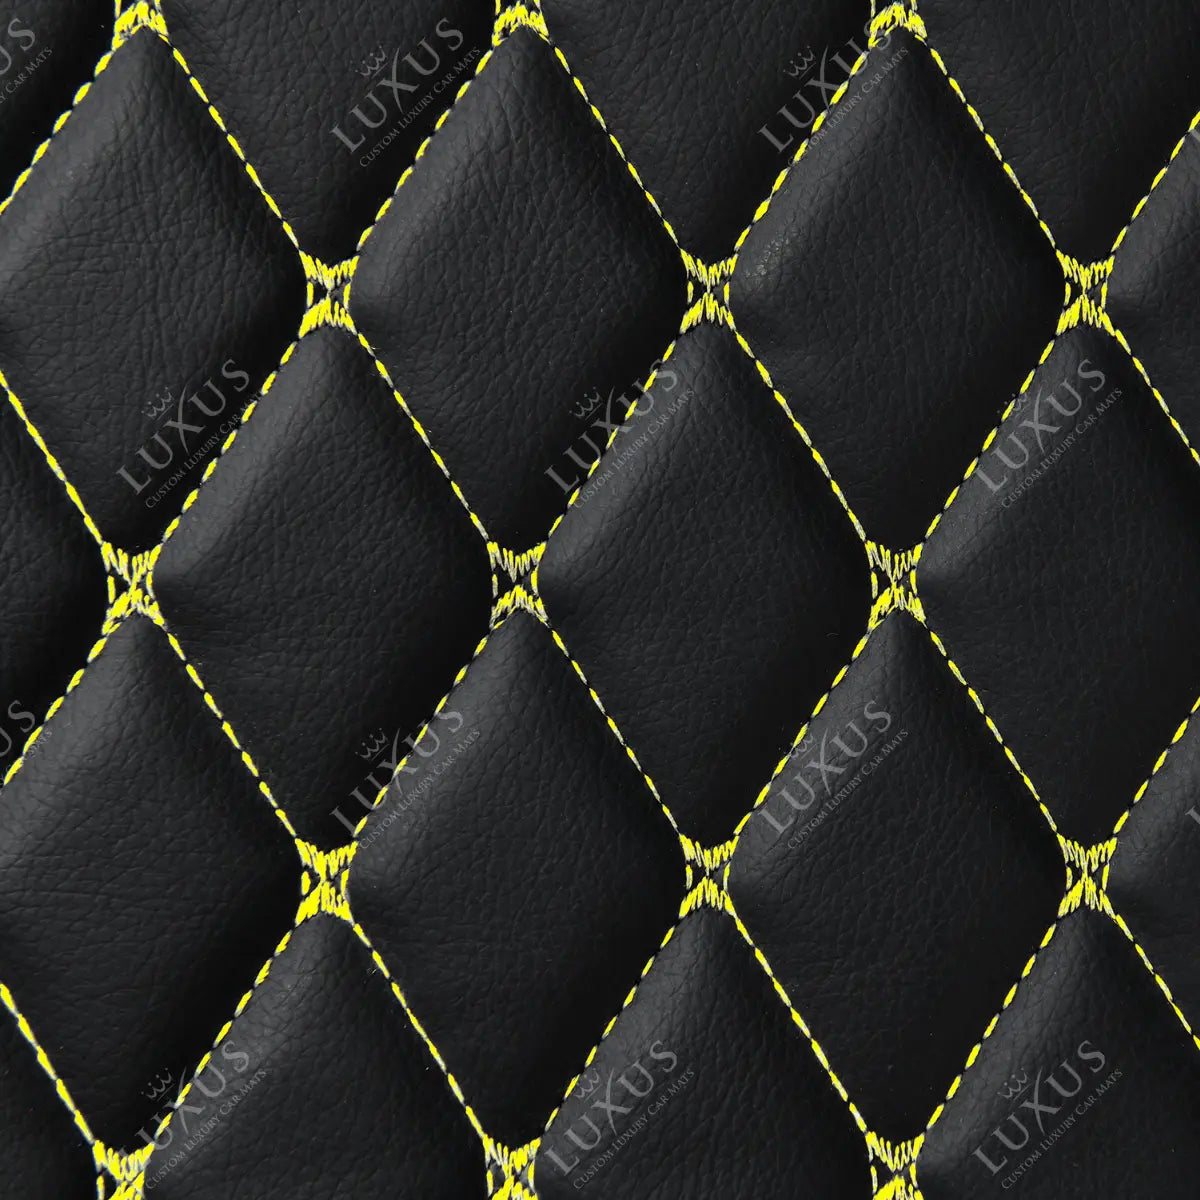 Black & Yellow Stitching 3D Diamond Luxury Boot/Trunk Mat